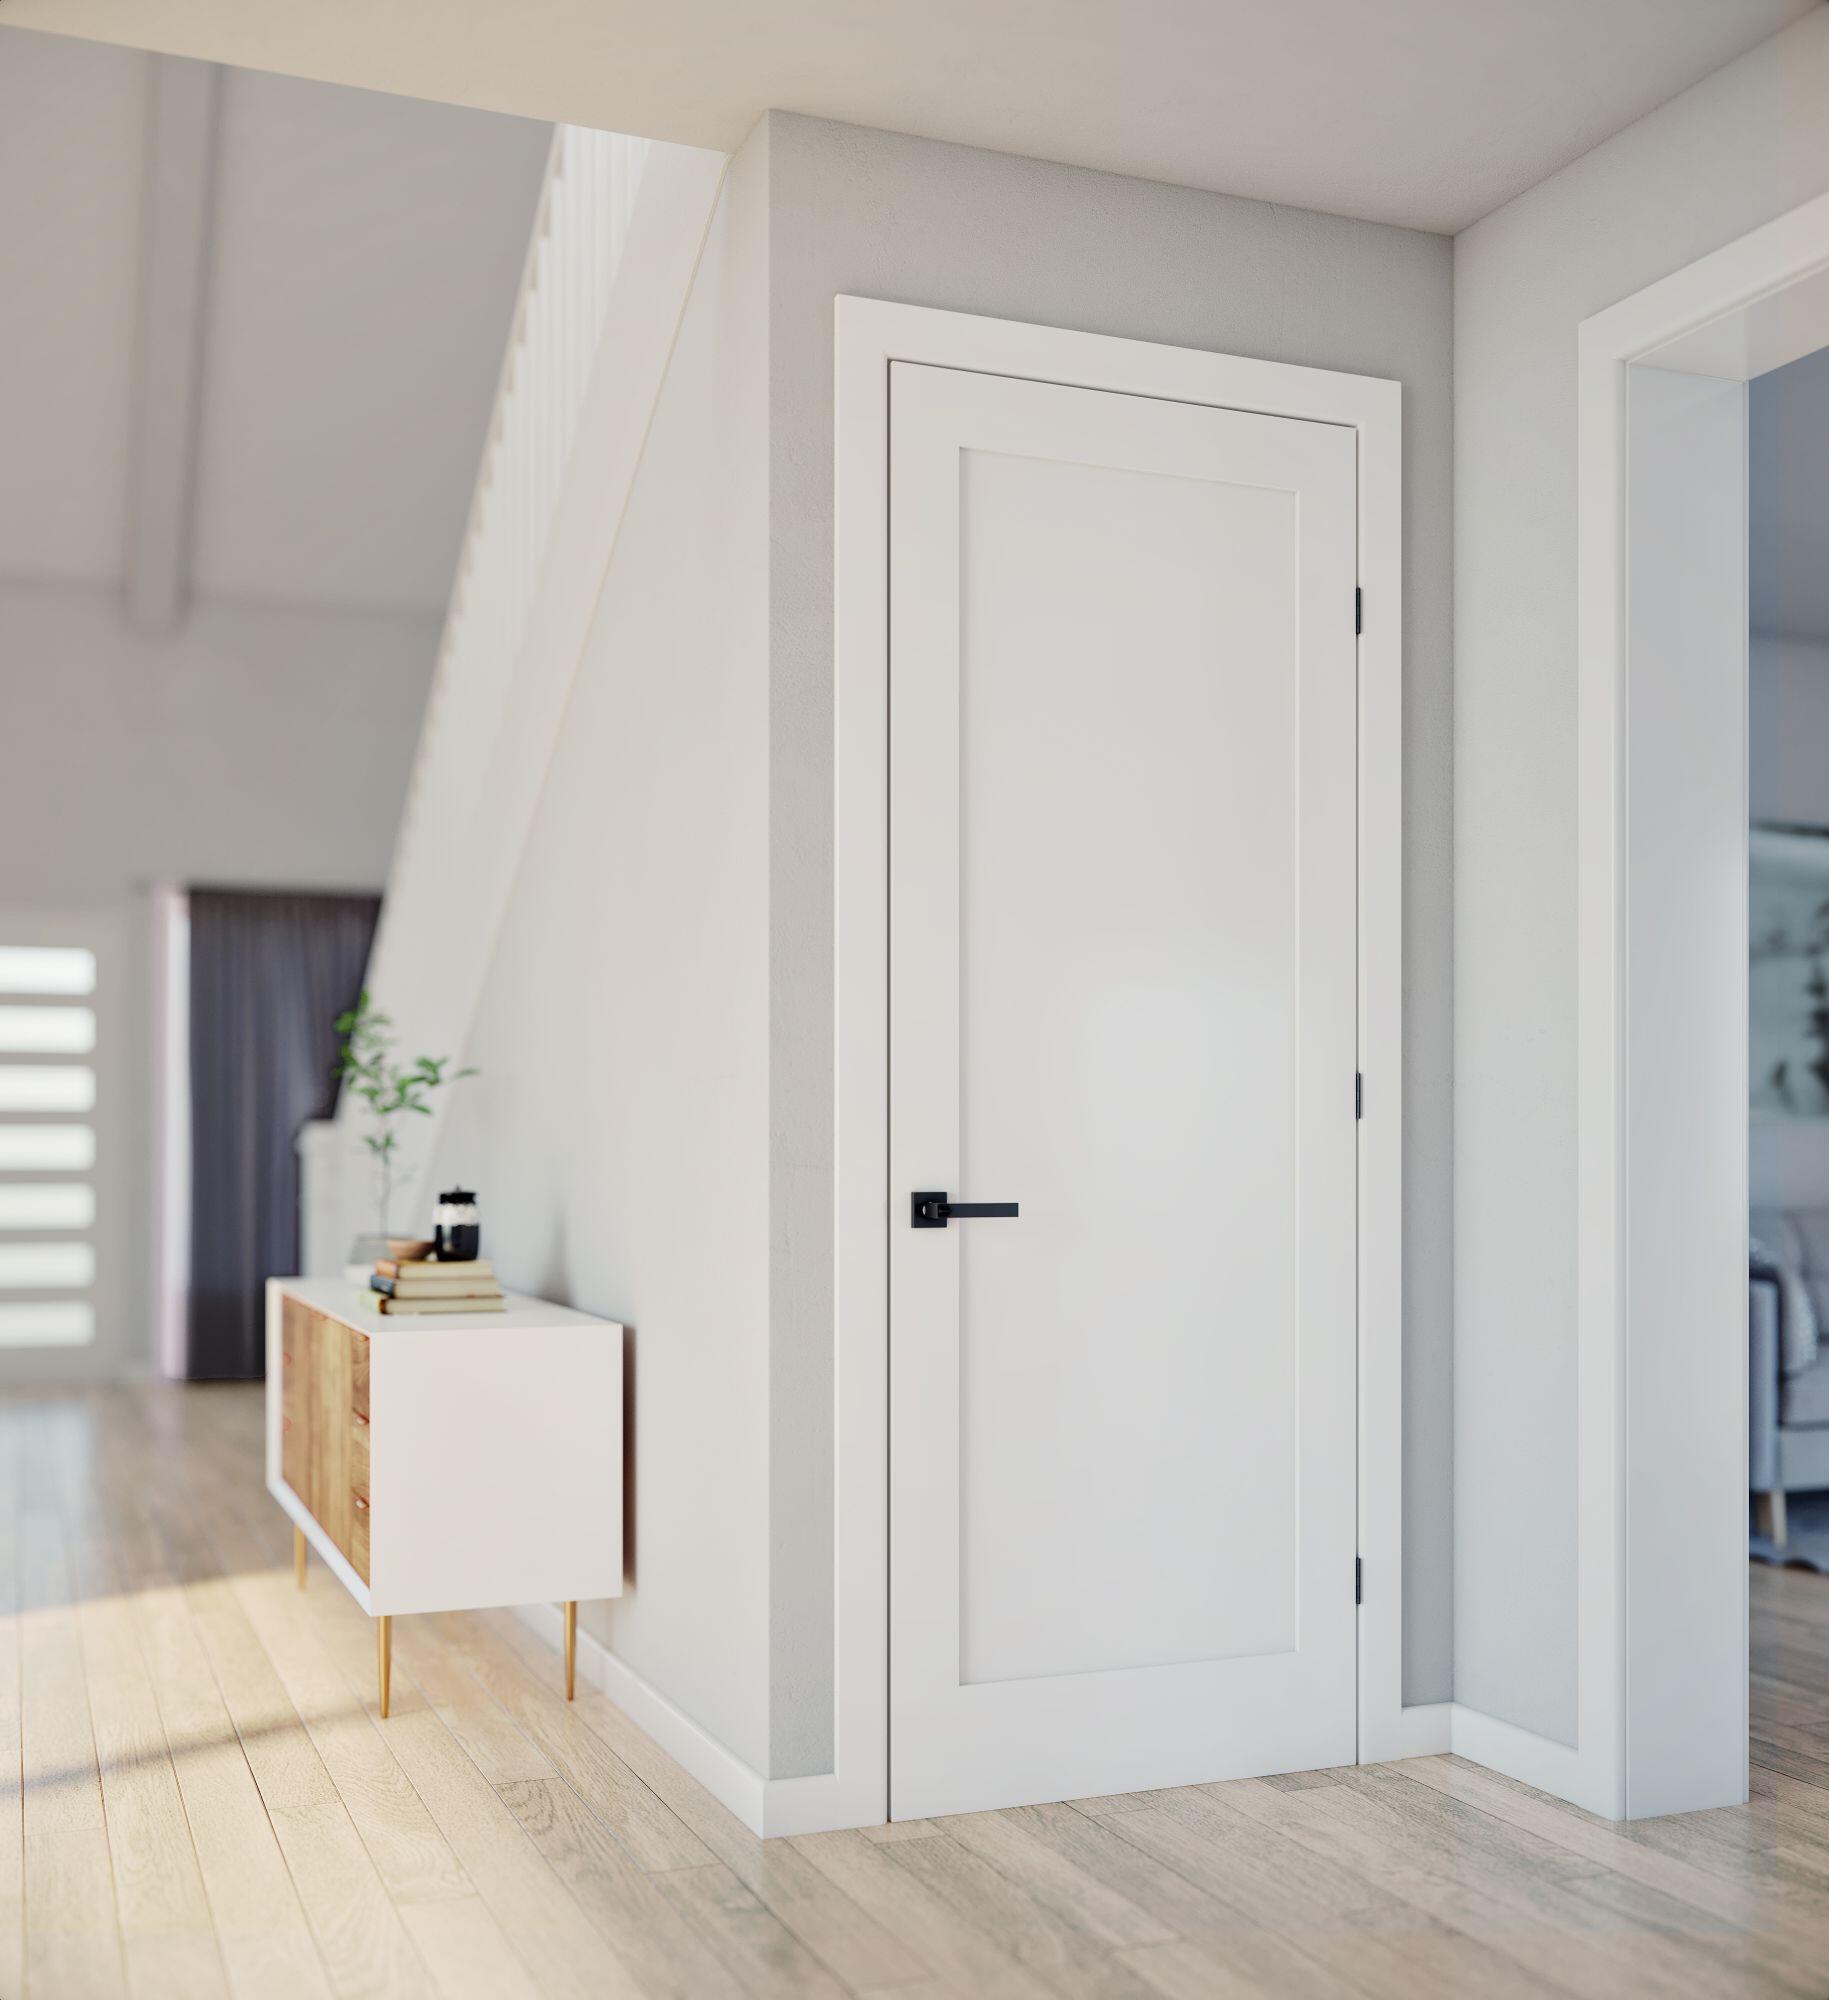 https://www.doorsplus.com.au/wp-content/uploads/2021/04/Doors-Plus-Internal-Shaker-Wardrobe-doube-hinged-painted-white-single-hinged-door-with-matt-black-passage-sets-with-mirror.jpg